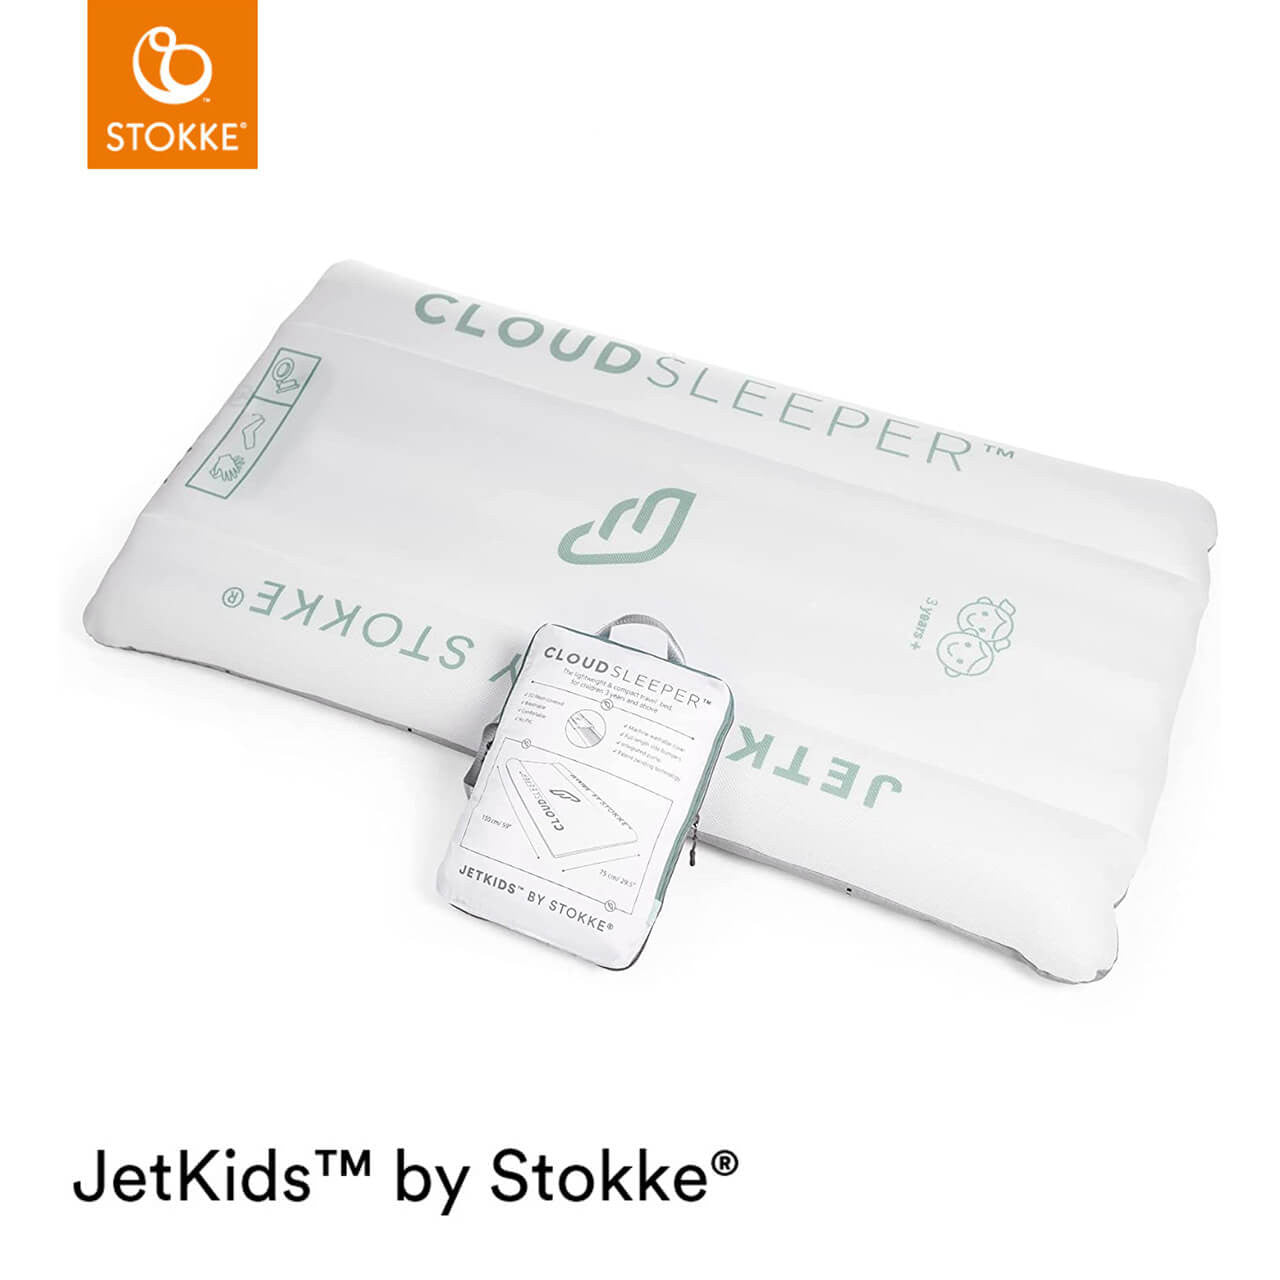 Cama Inflable | CloudSleeper Jetkids de Stokke